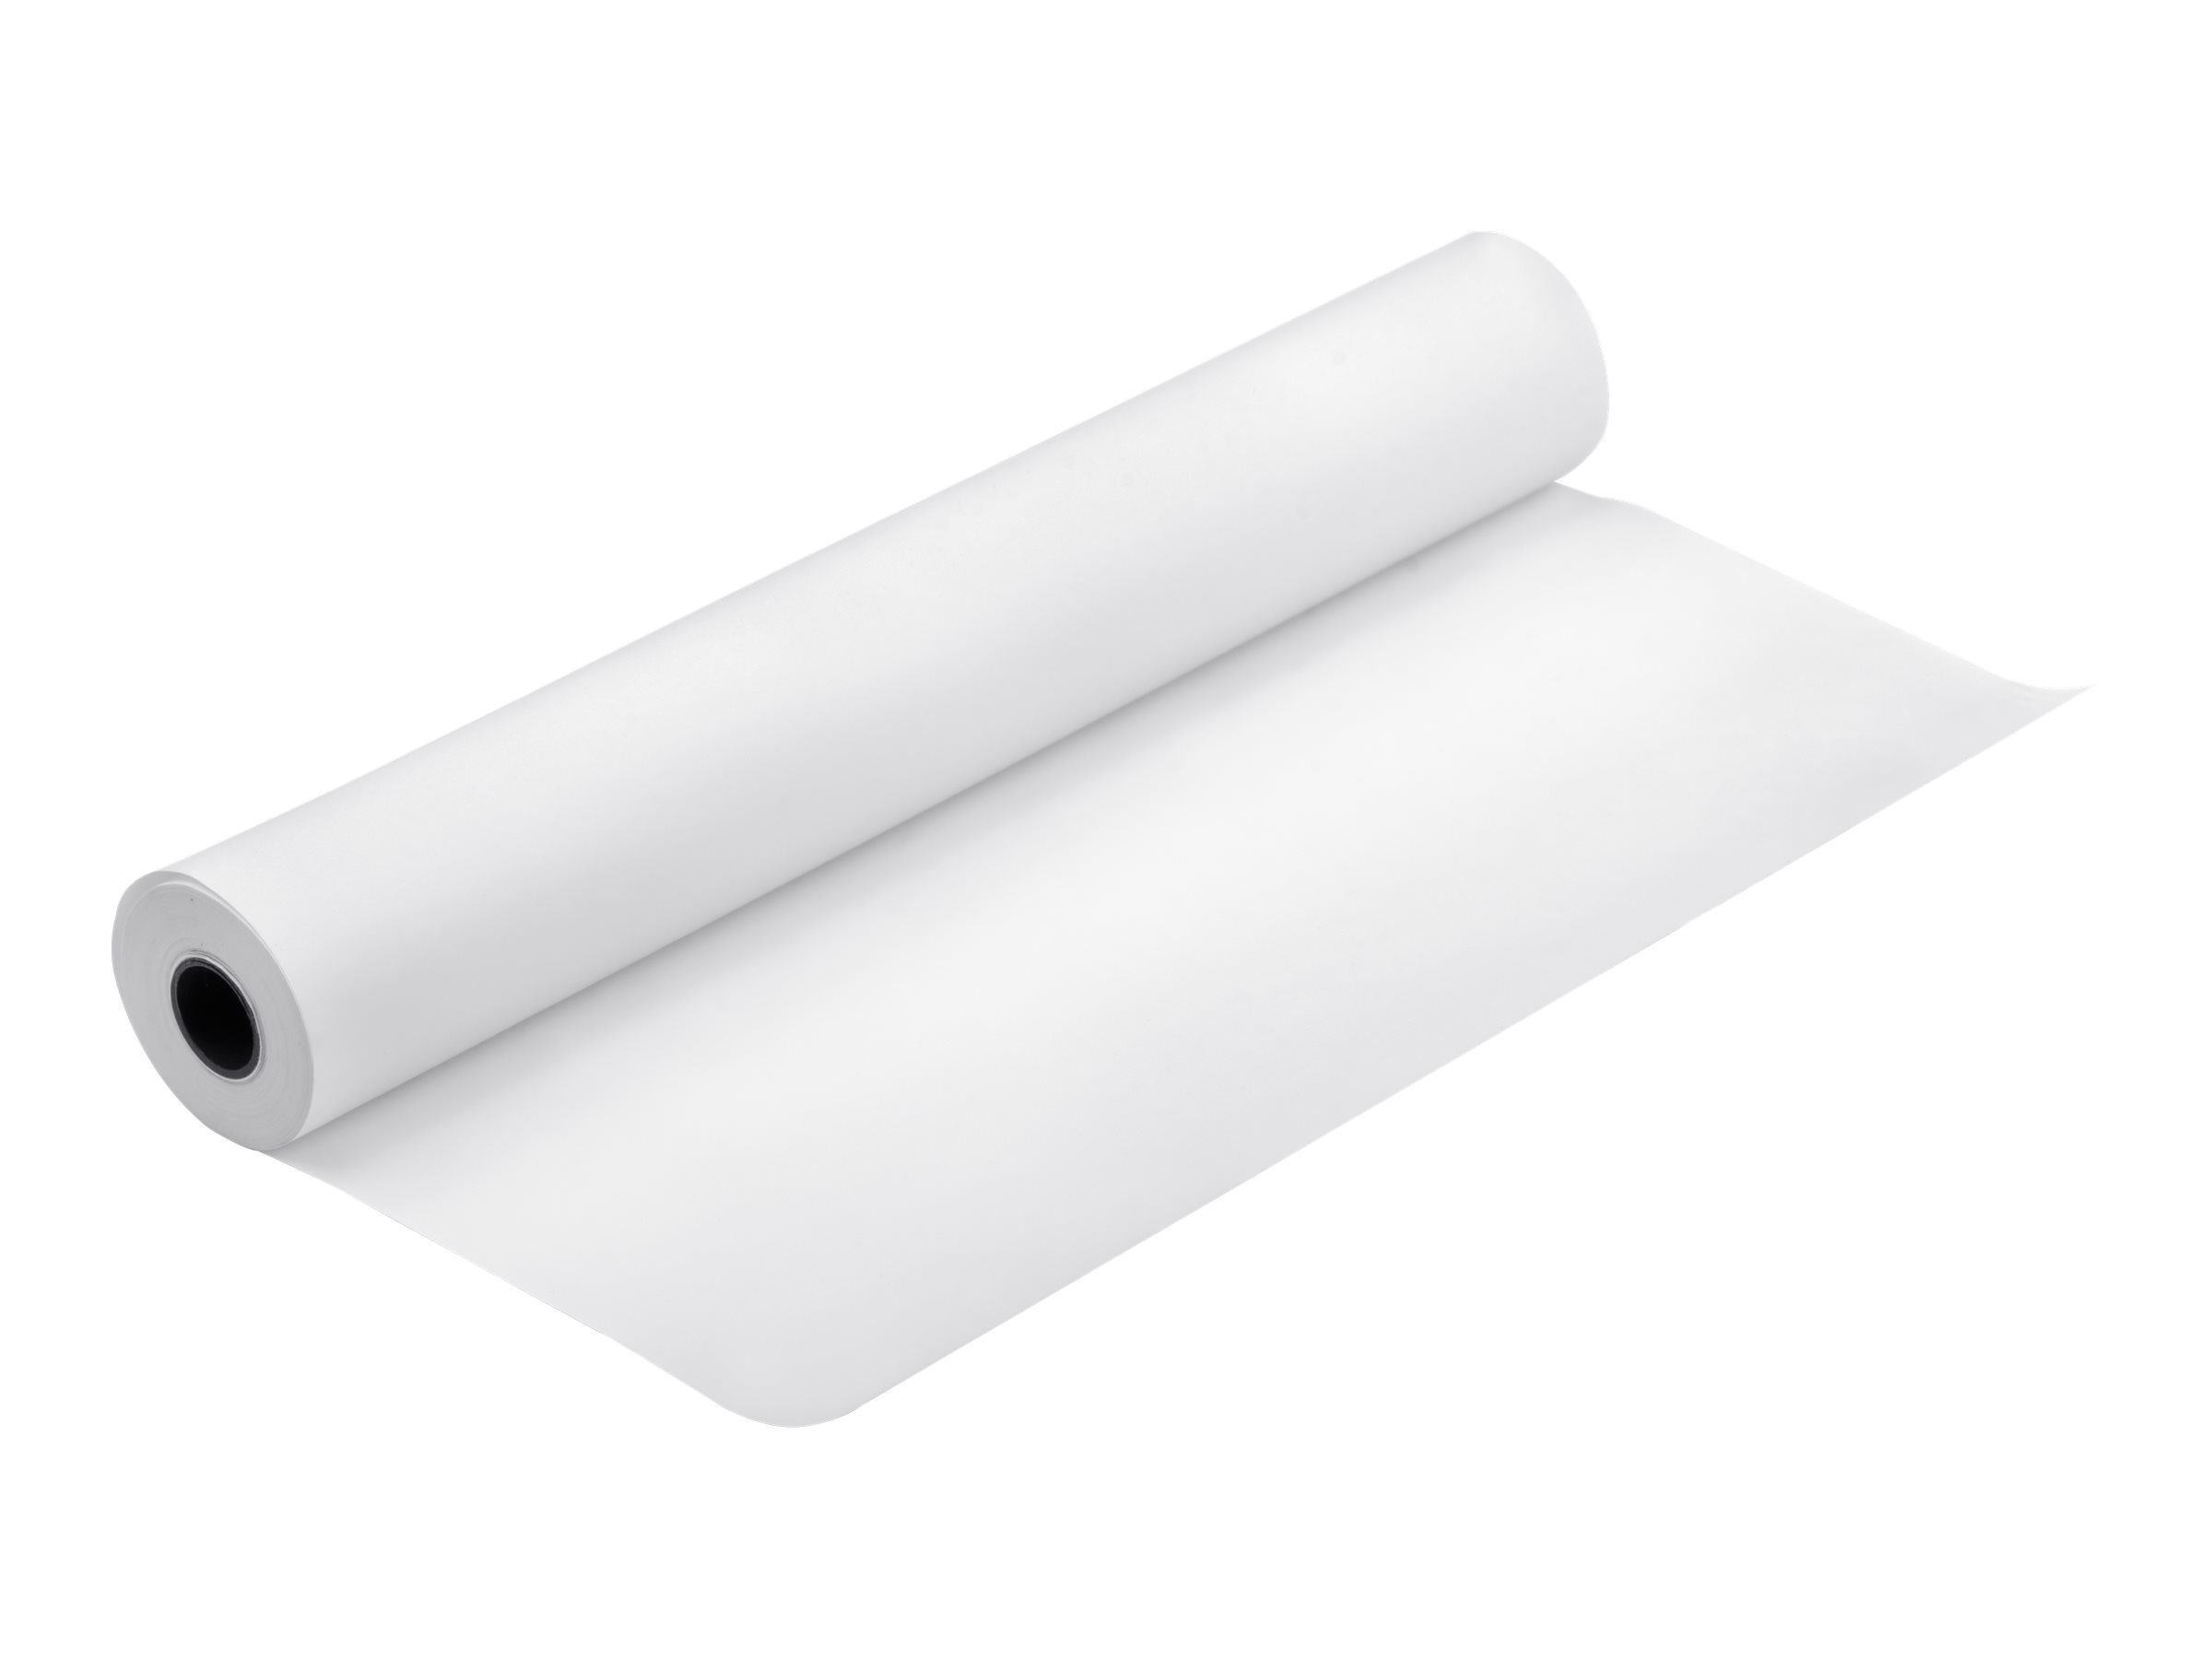 Epson UltraSmooth Fine Art - Baumwolle - Natural White - Rolle (43,2 cm x 15,2 m)